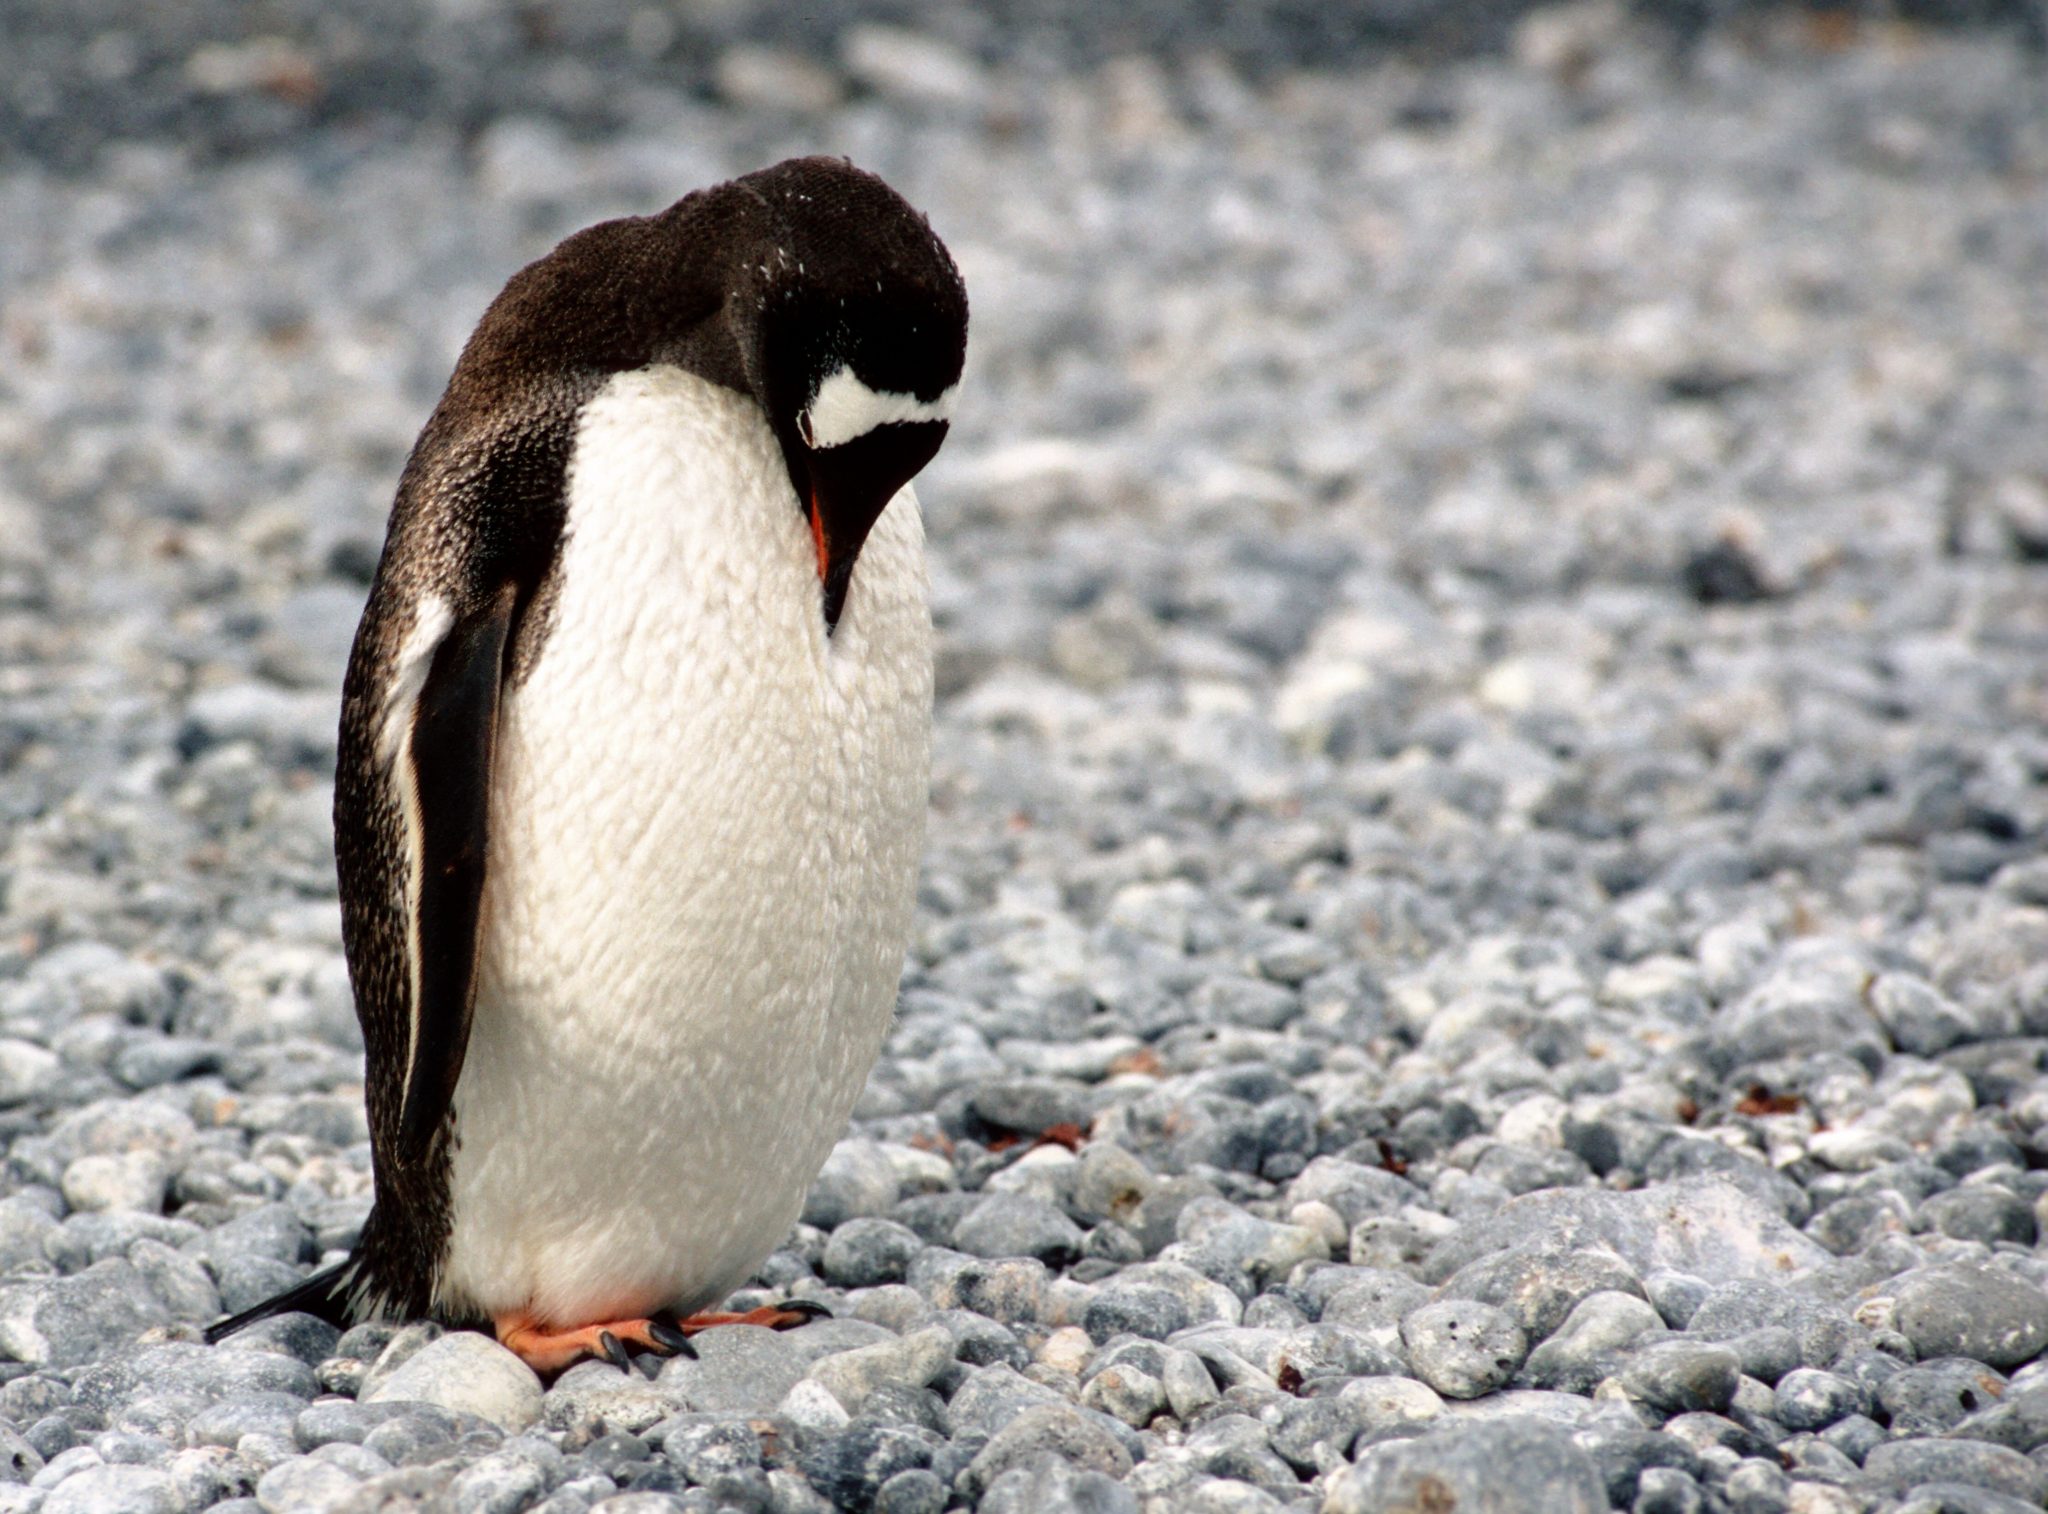 Pinguin, der schulödbewusst guckt